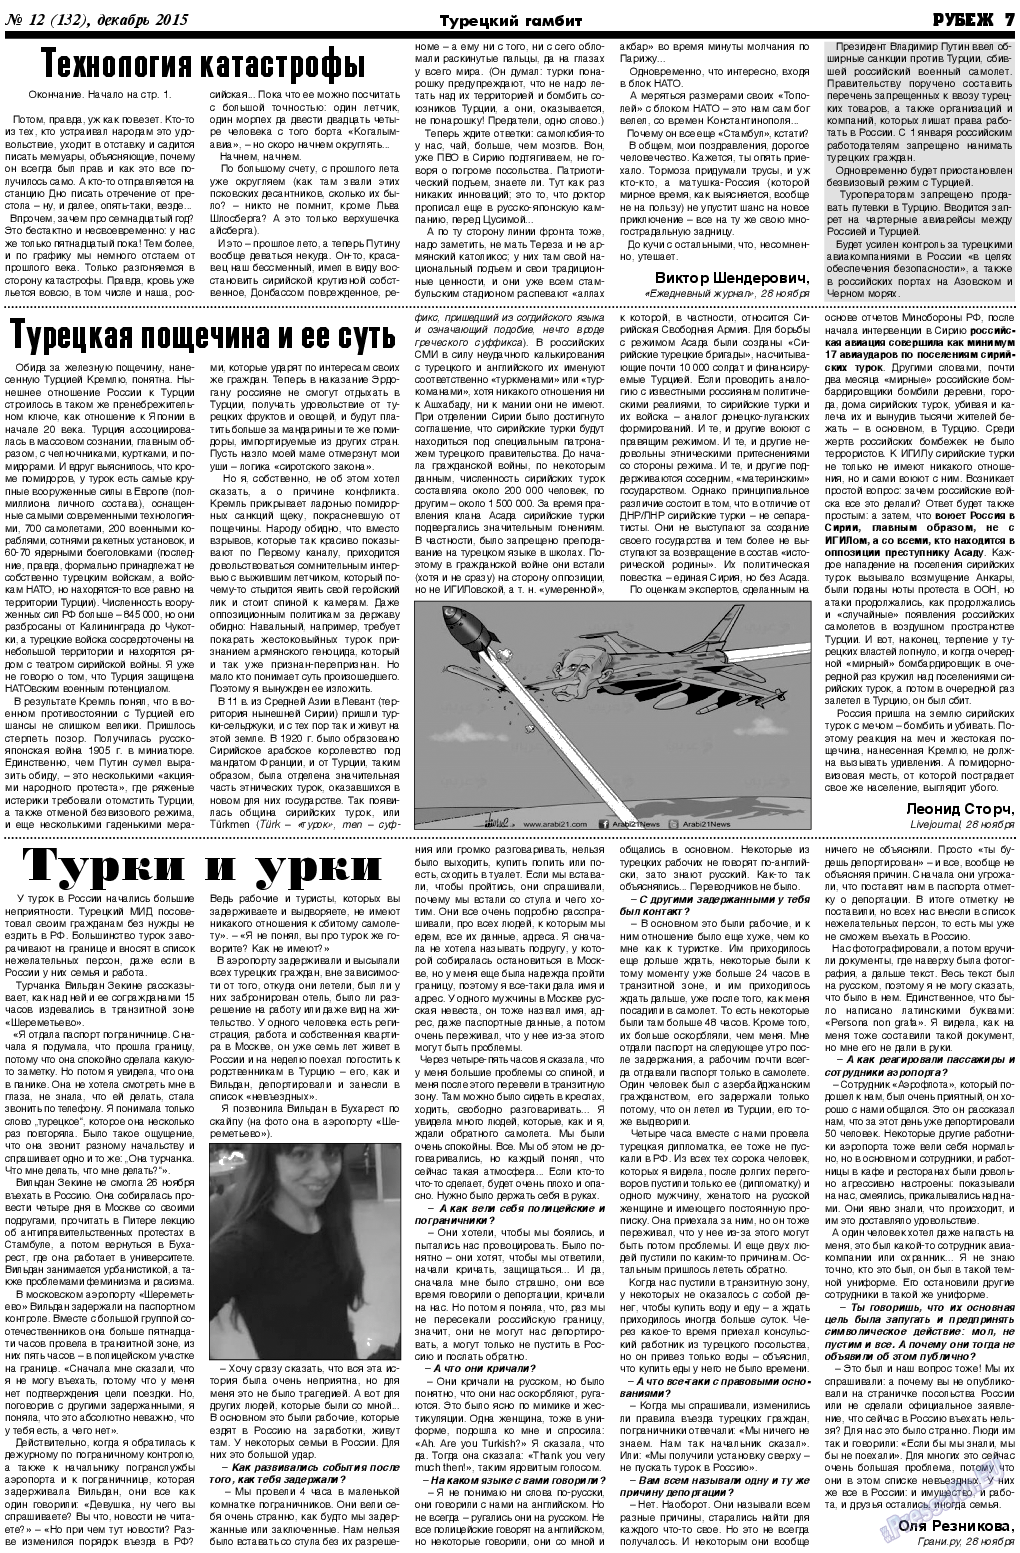 Рубеж, газета. 2015 №12 стр.7